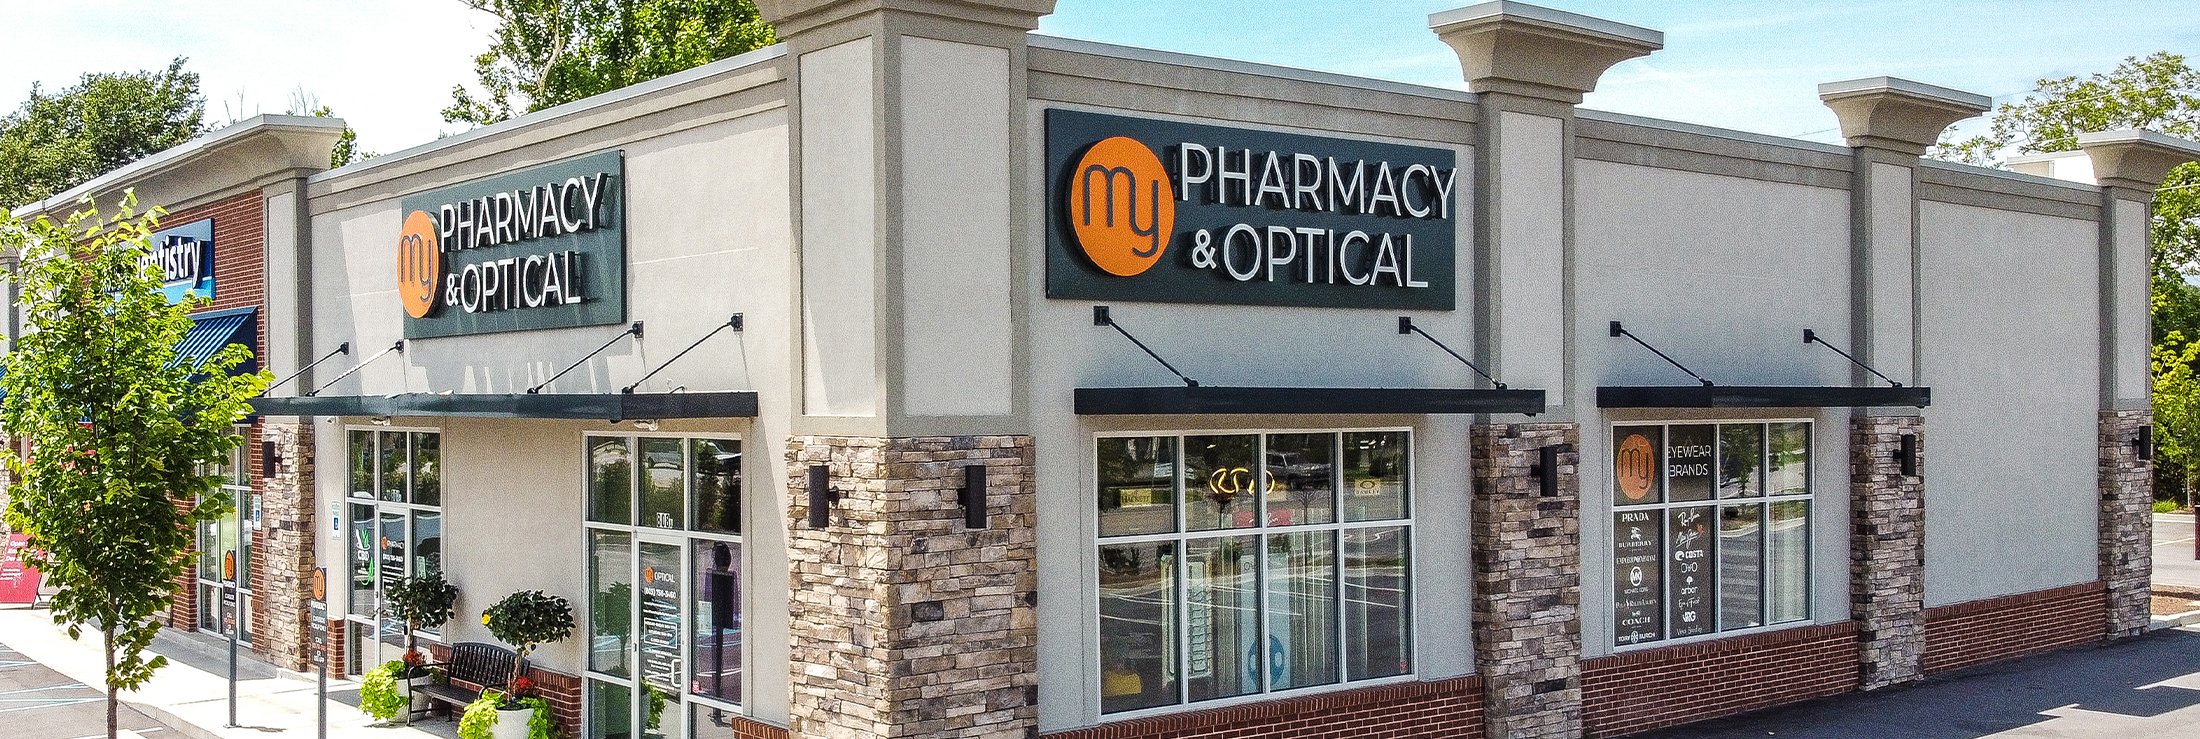 My Pharmacy & Optical 2